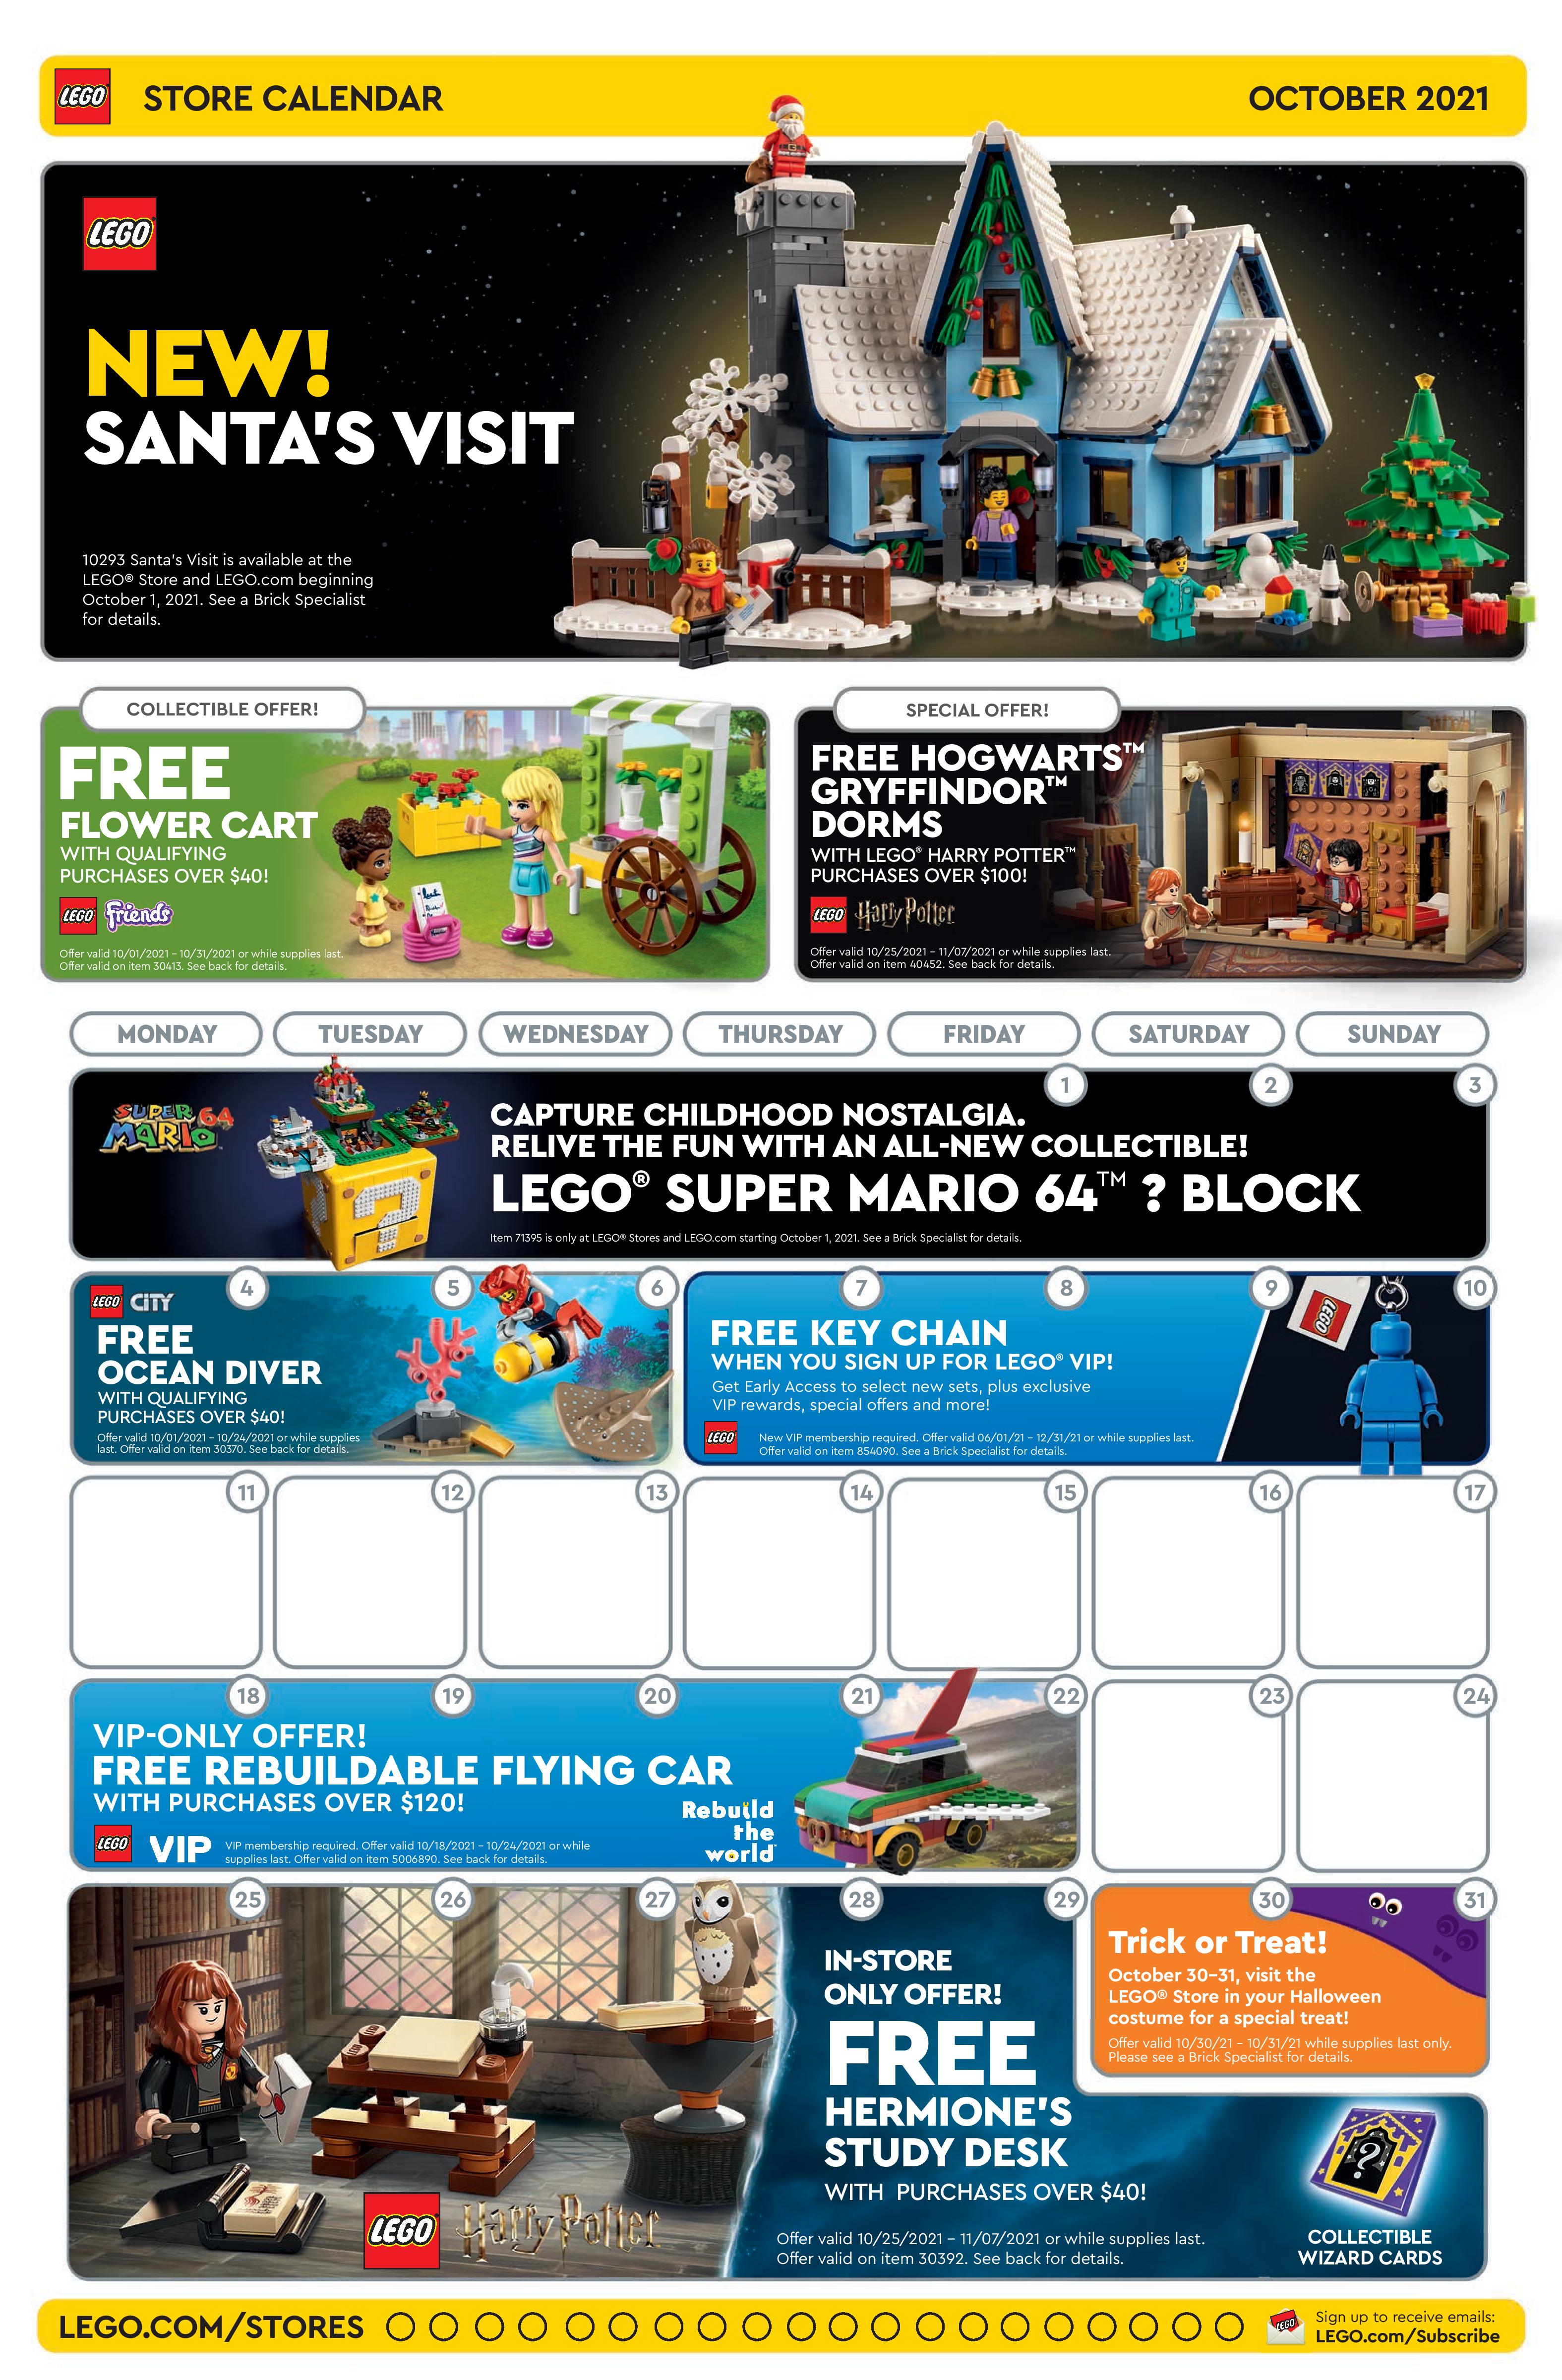 Lego October 2022 Calendar Lego October 2021 Store Calendar Promotions And Events - The Brick Fan